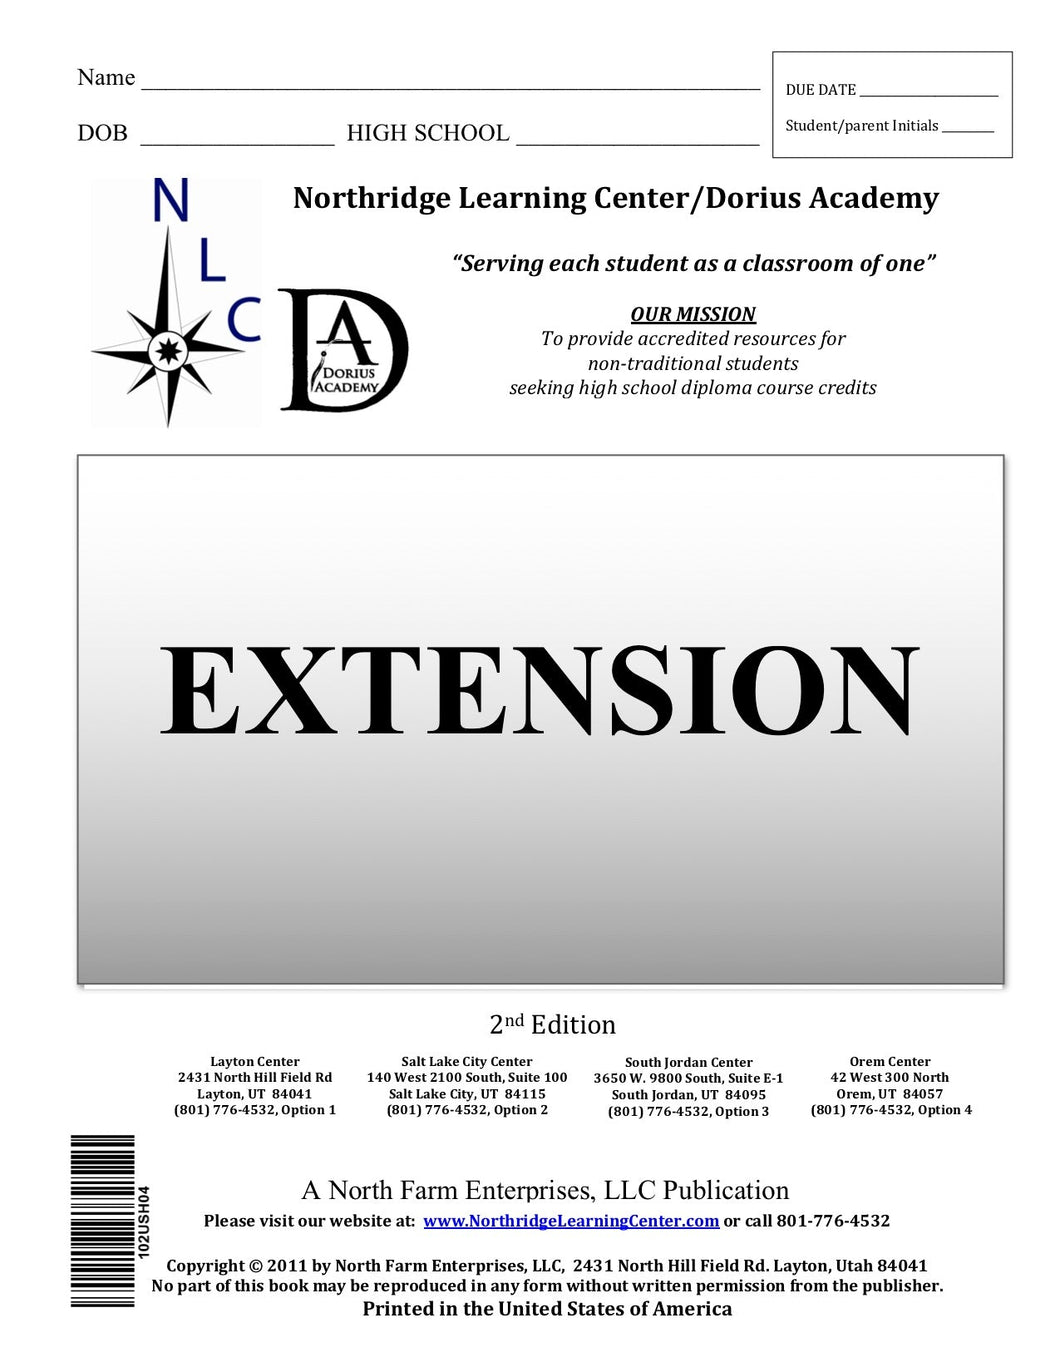 Language Arts 11, Section IV - Extension